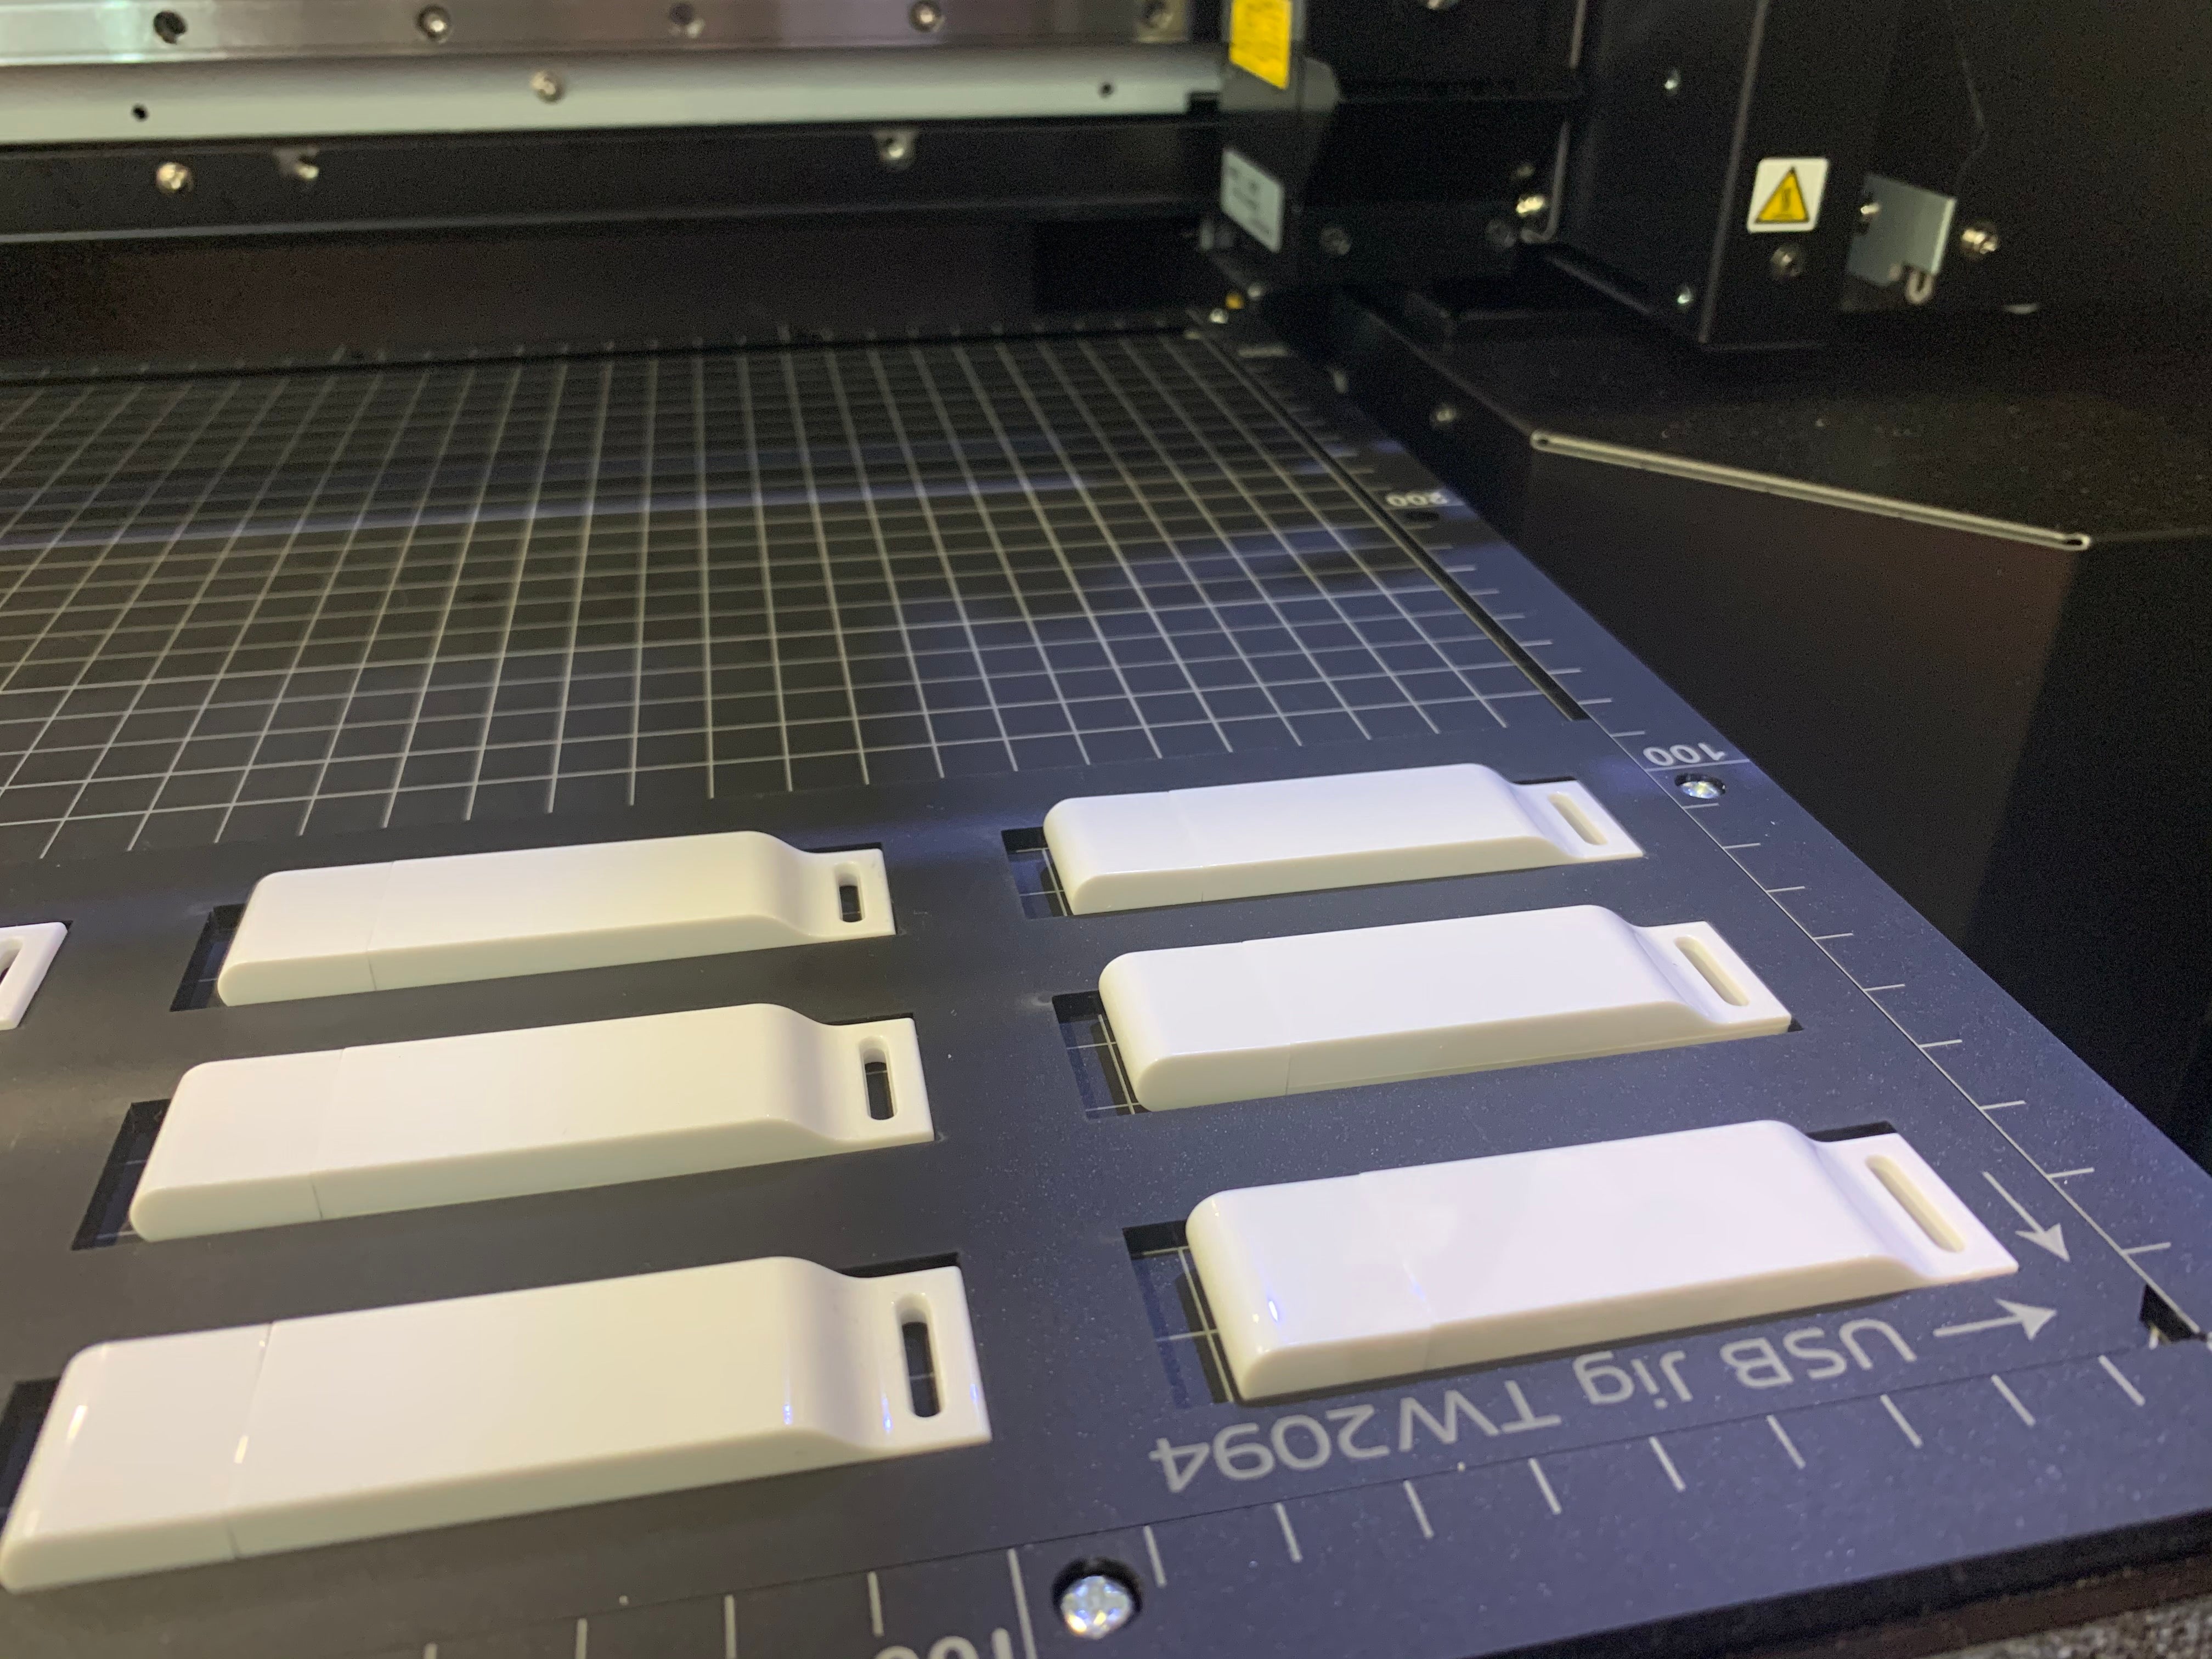 Roland Printing Jig Starter Kit for LEF 200 Series - Set A